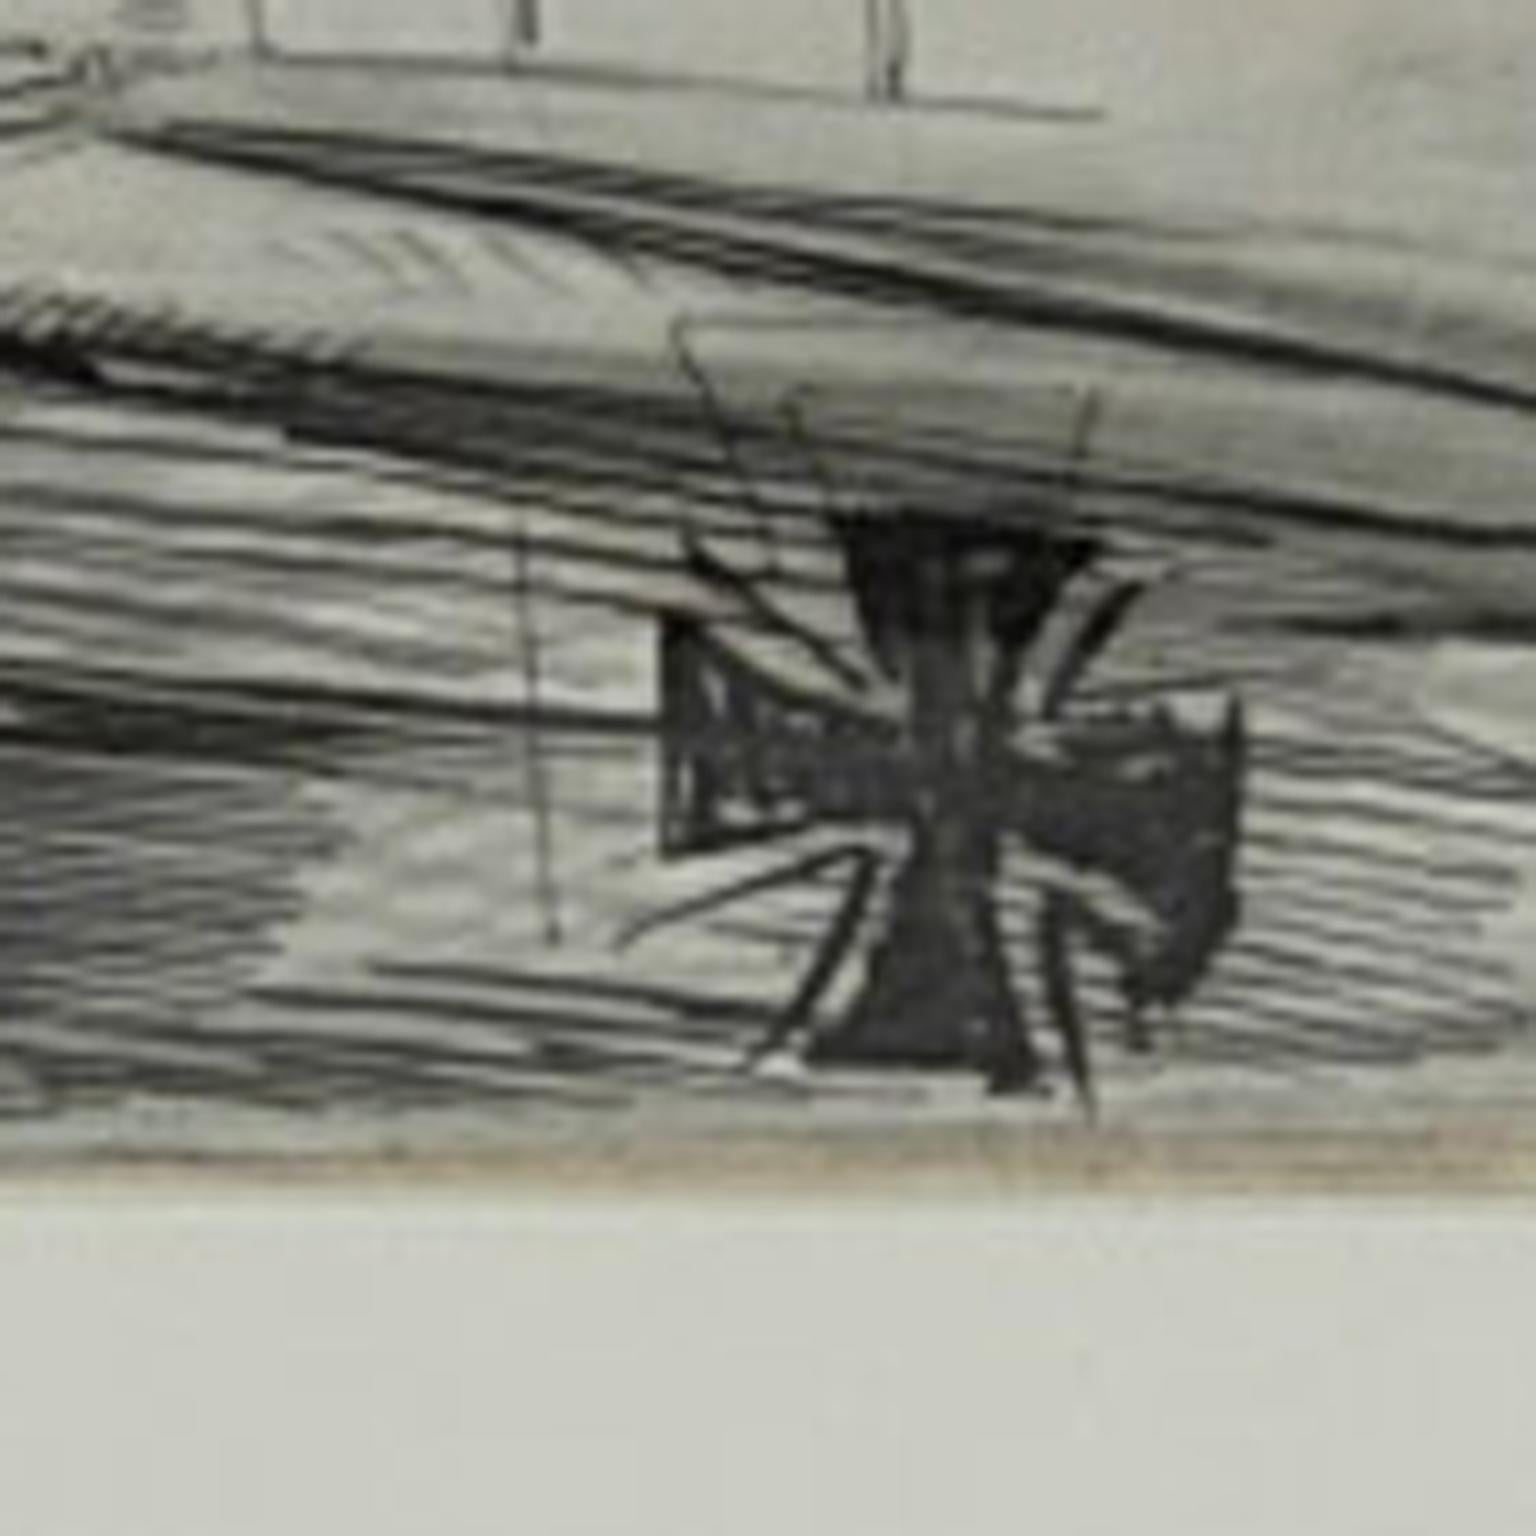 Italian Indian ink drawing depicting a Berg Av C I WWI Aircraft